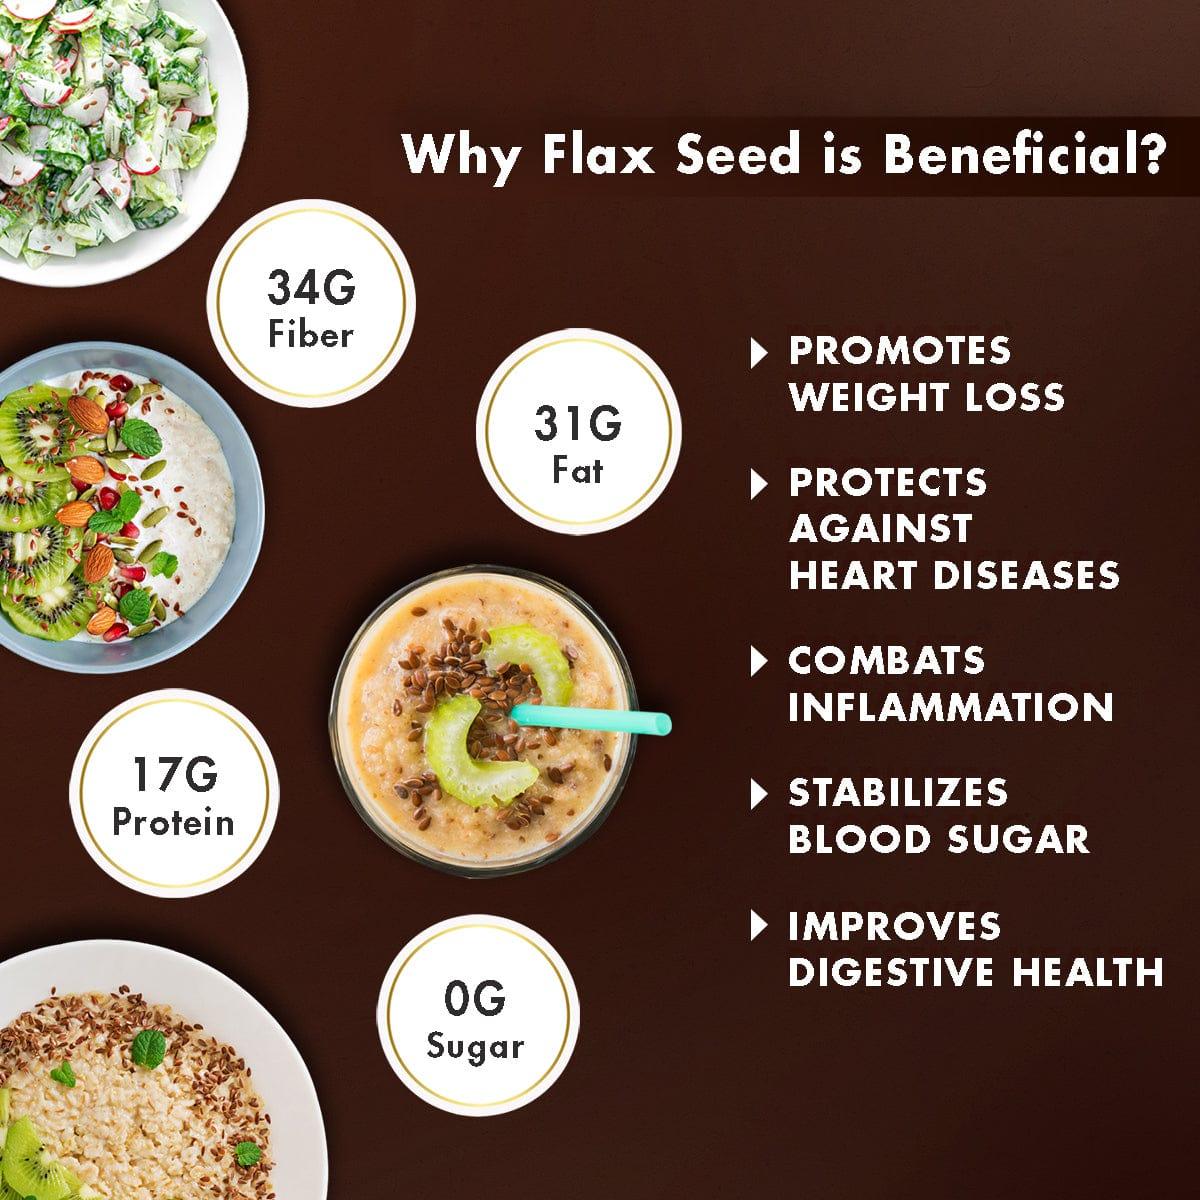 flax seed benefits